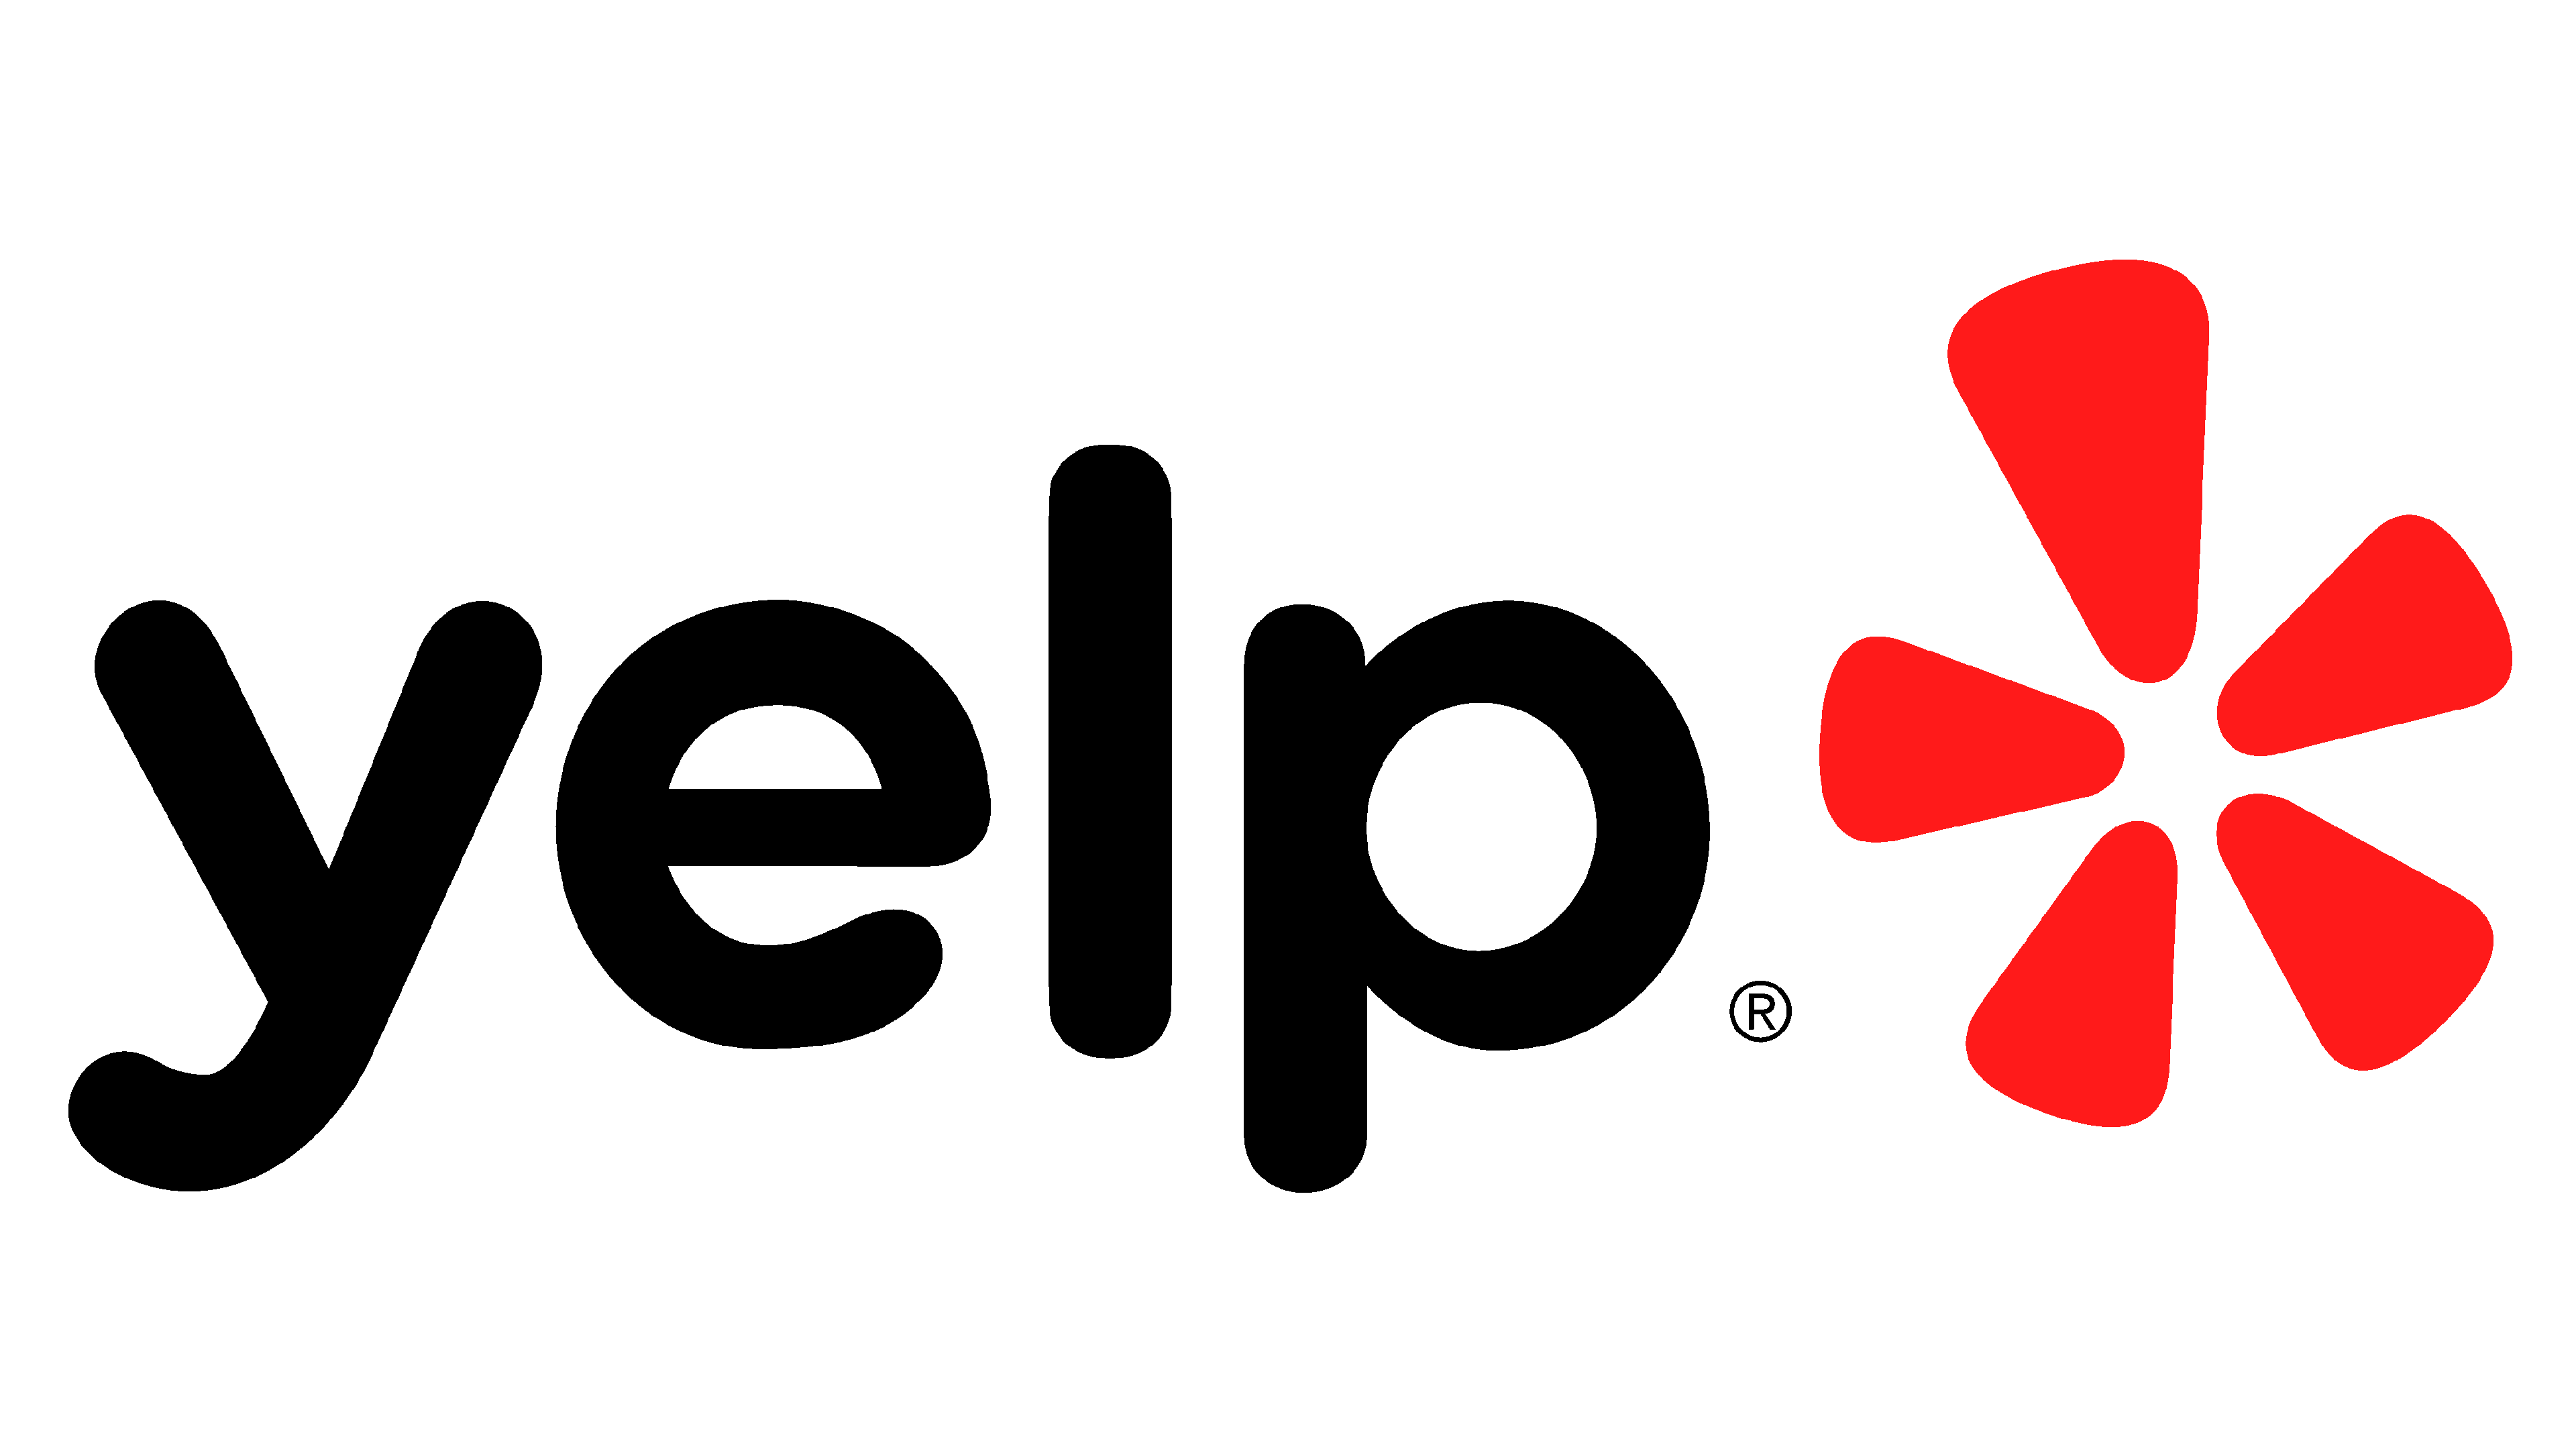 Yelp Sponsor - St. Louis